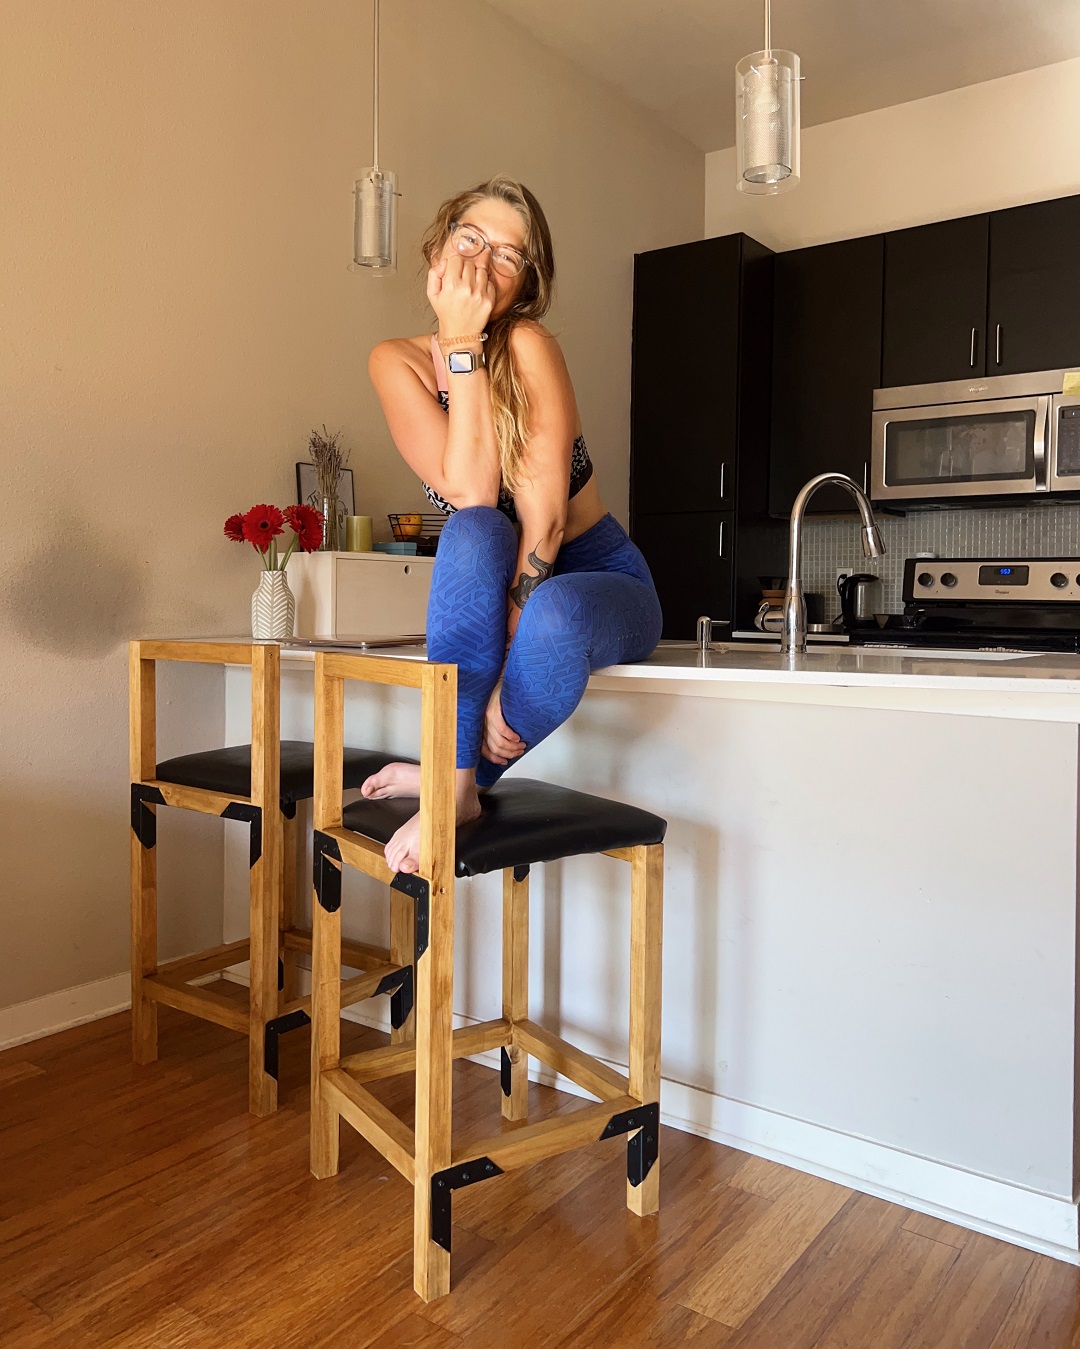 Joana Bianchi with her DIY countertop bar stools